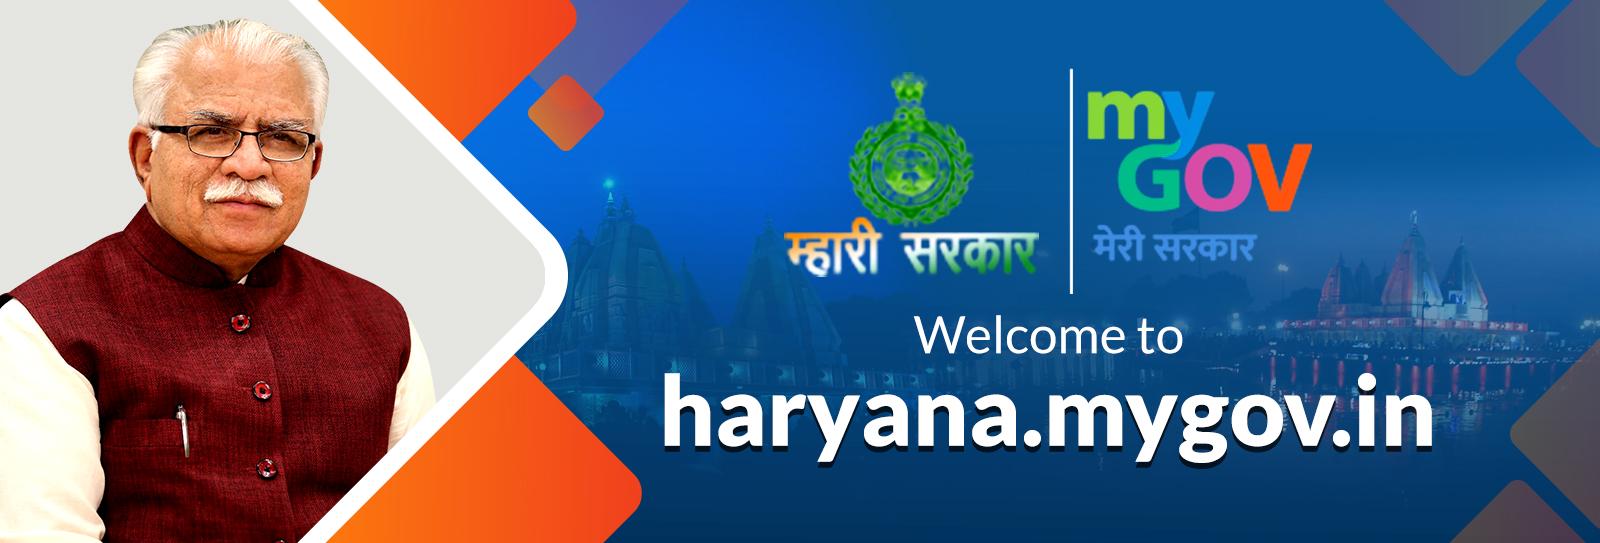 MyGov Haryana home page